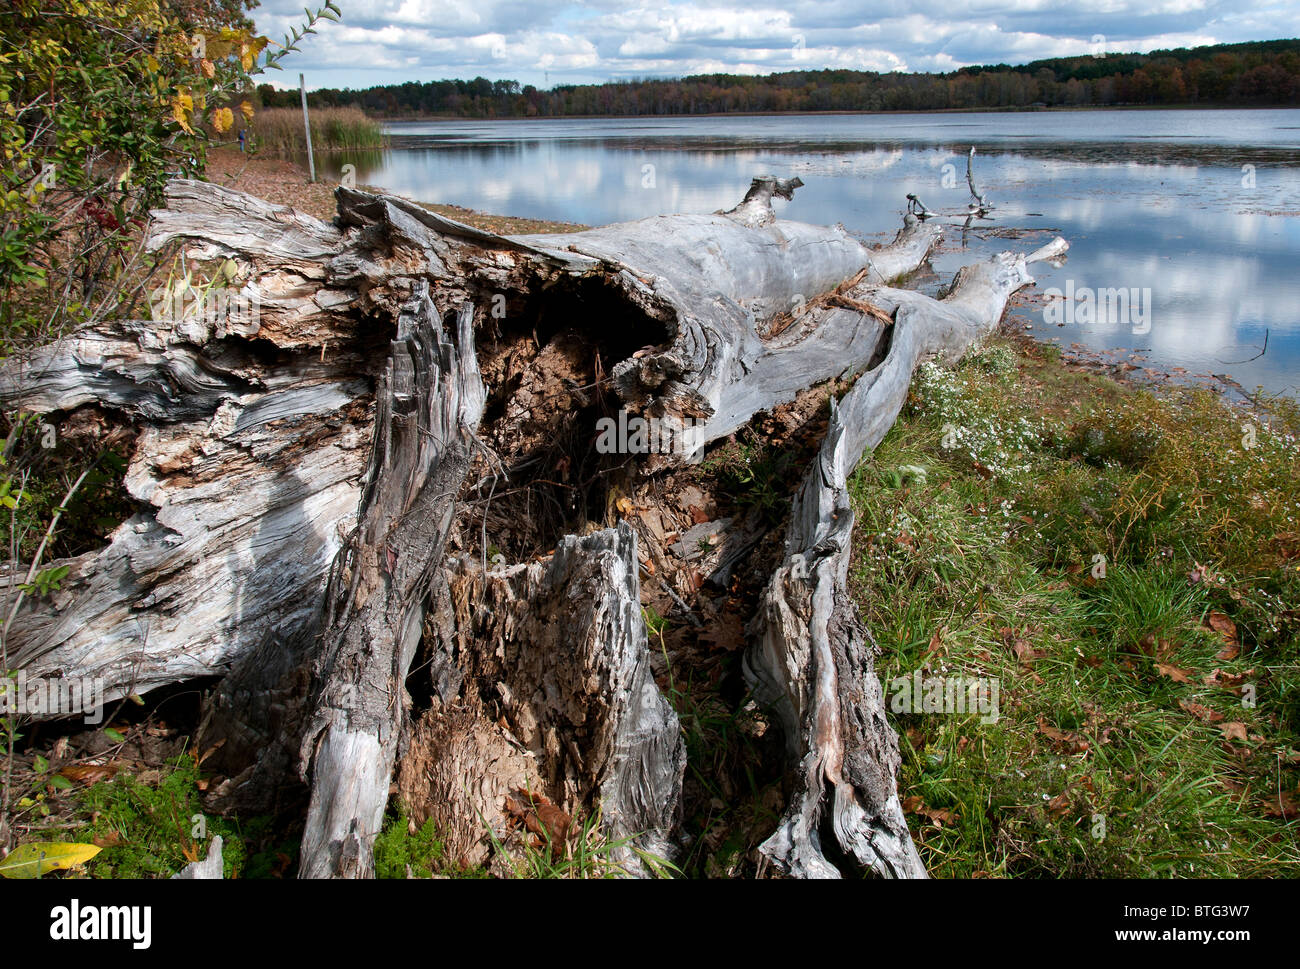 Fallen tree overlooking pond. Stock Photo